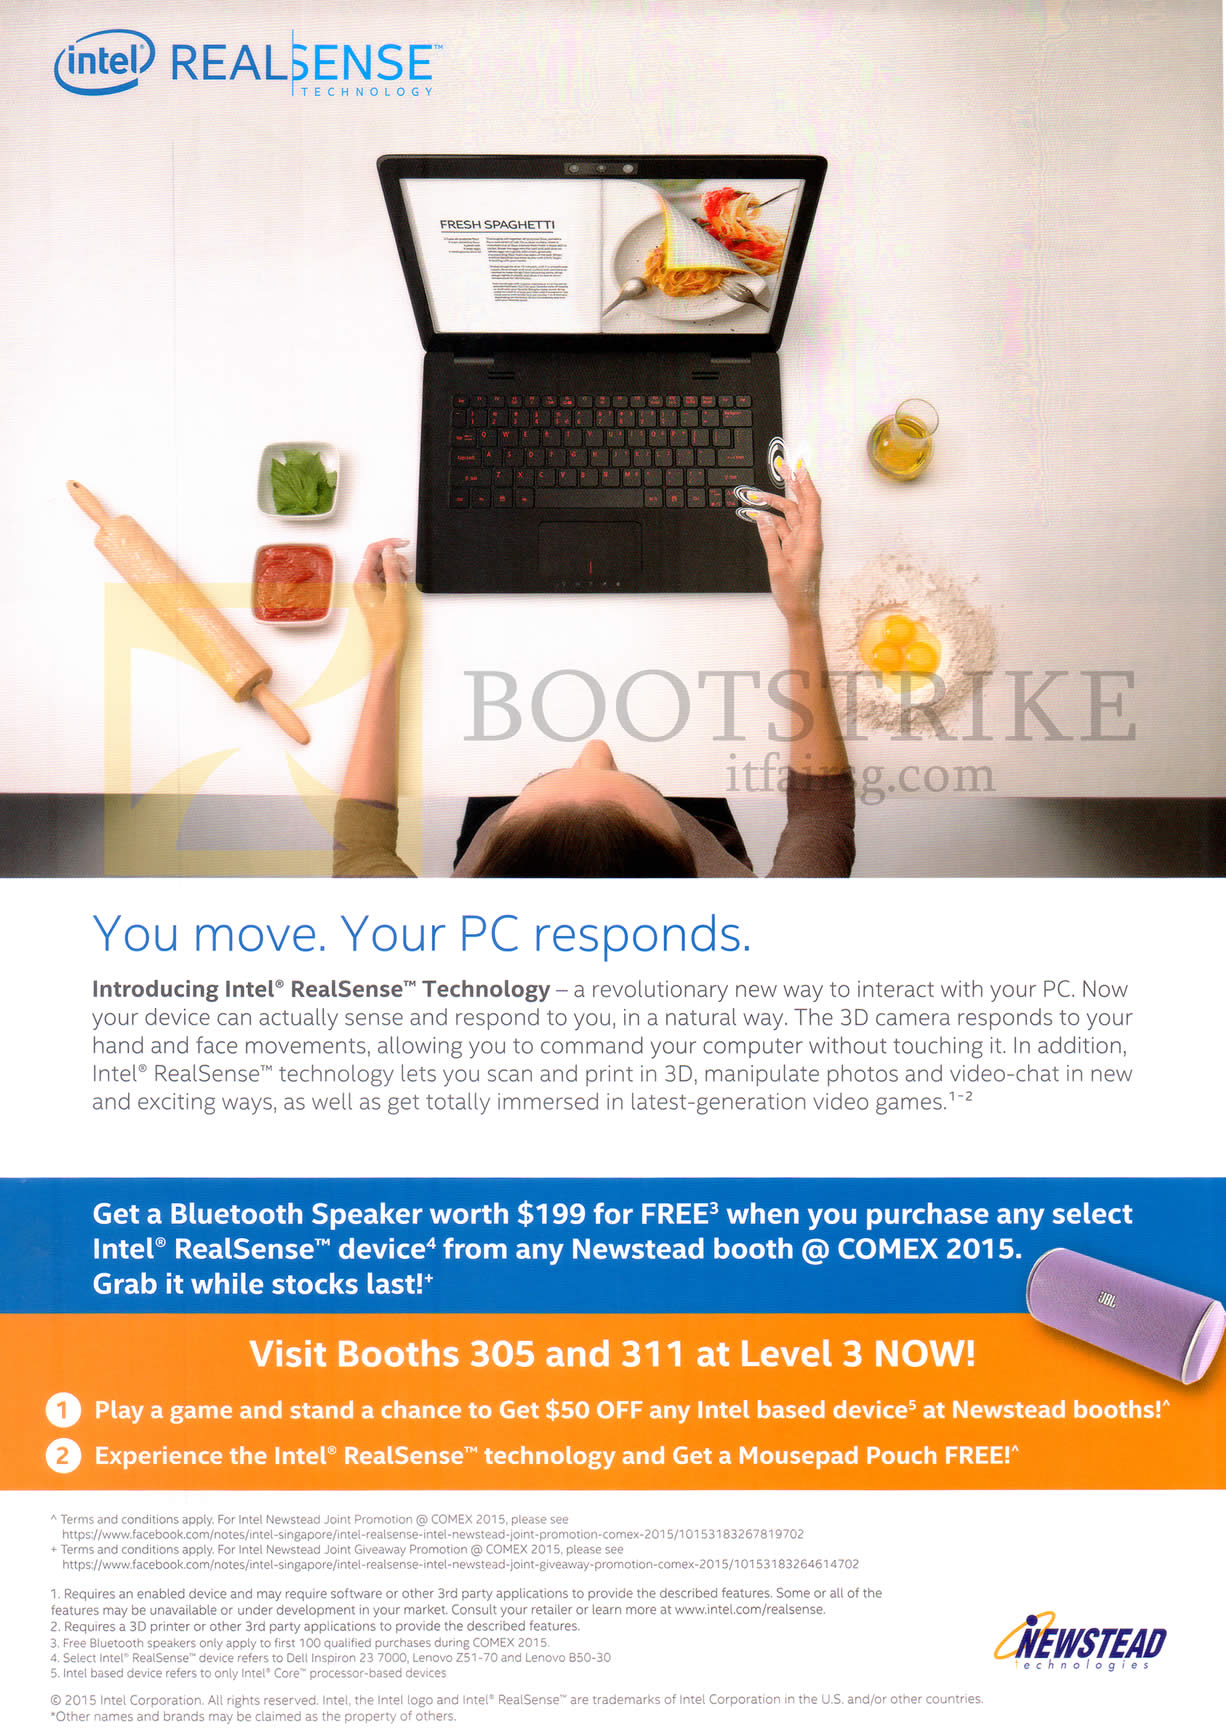 COMEX 2015 price list image brochure of Newstead Intel Notebooks Free Bluetooth Speaker, RealSense Device